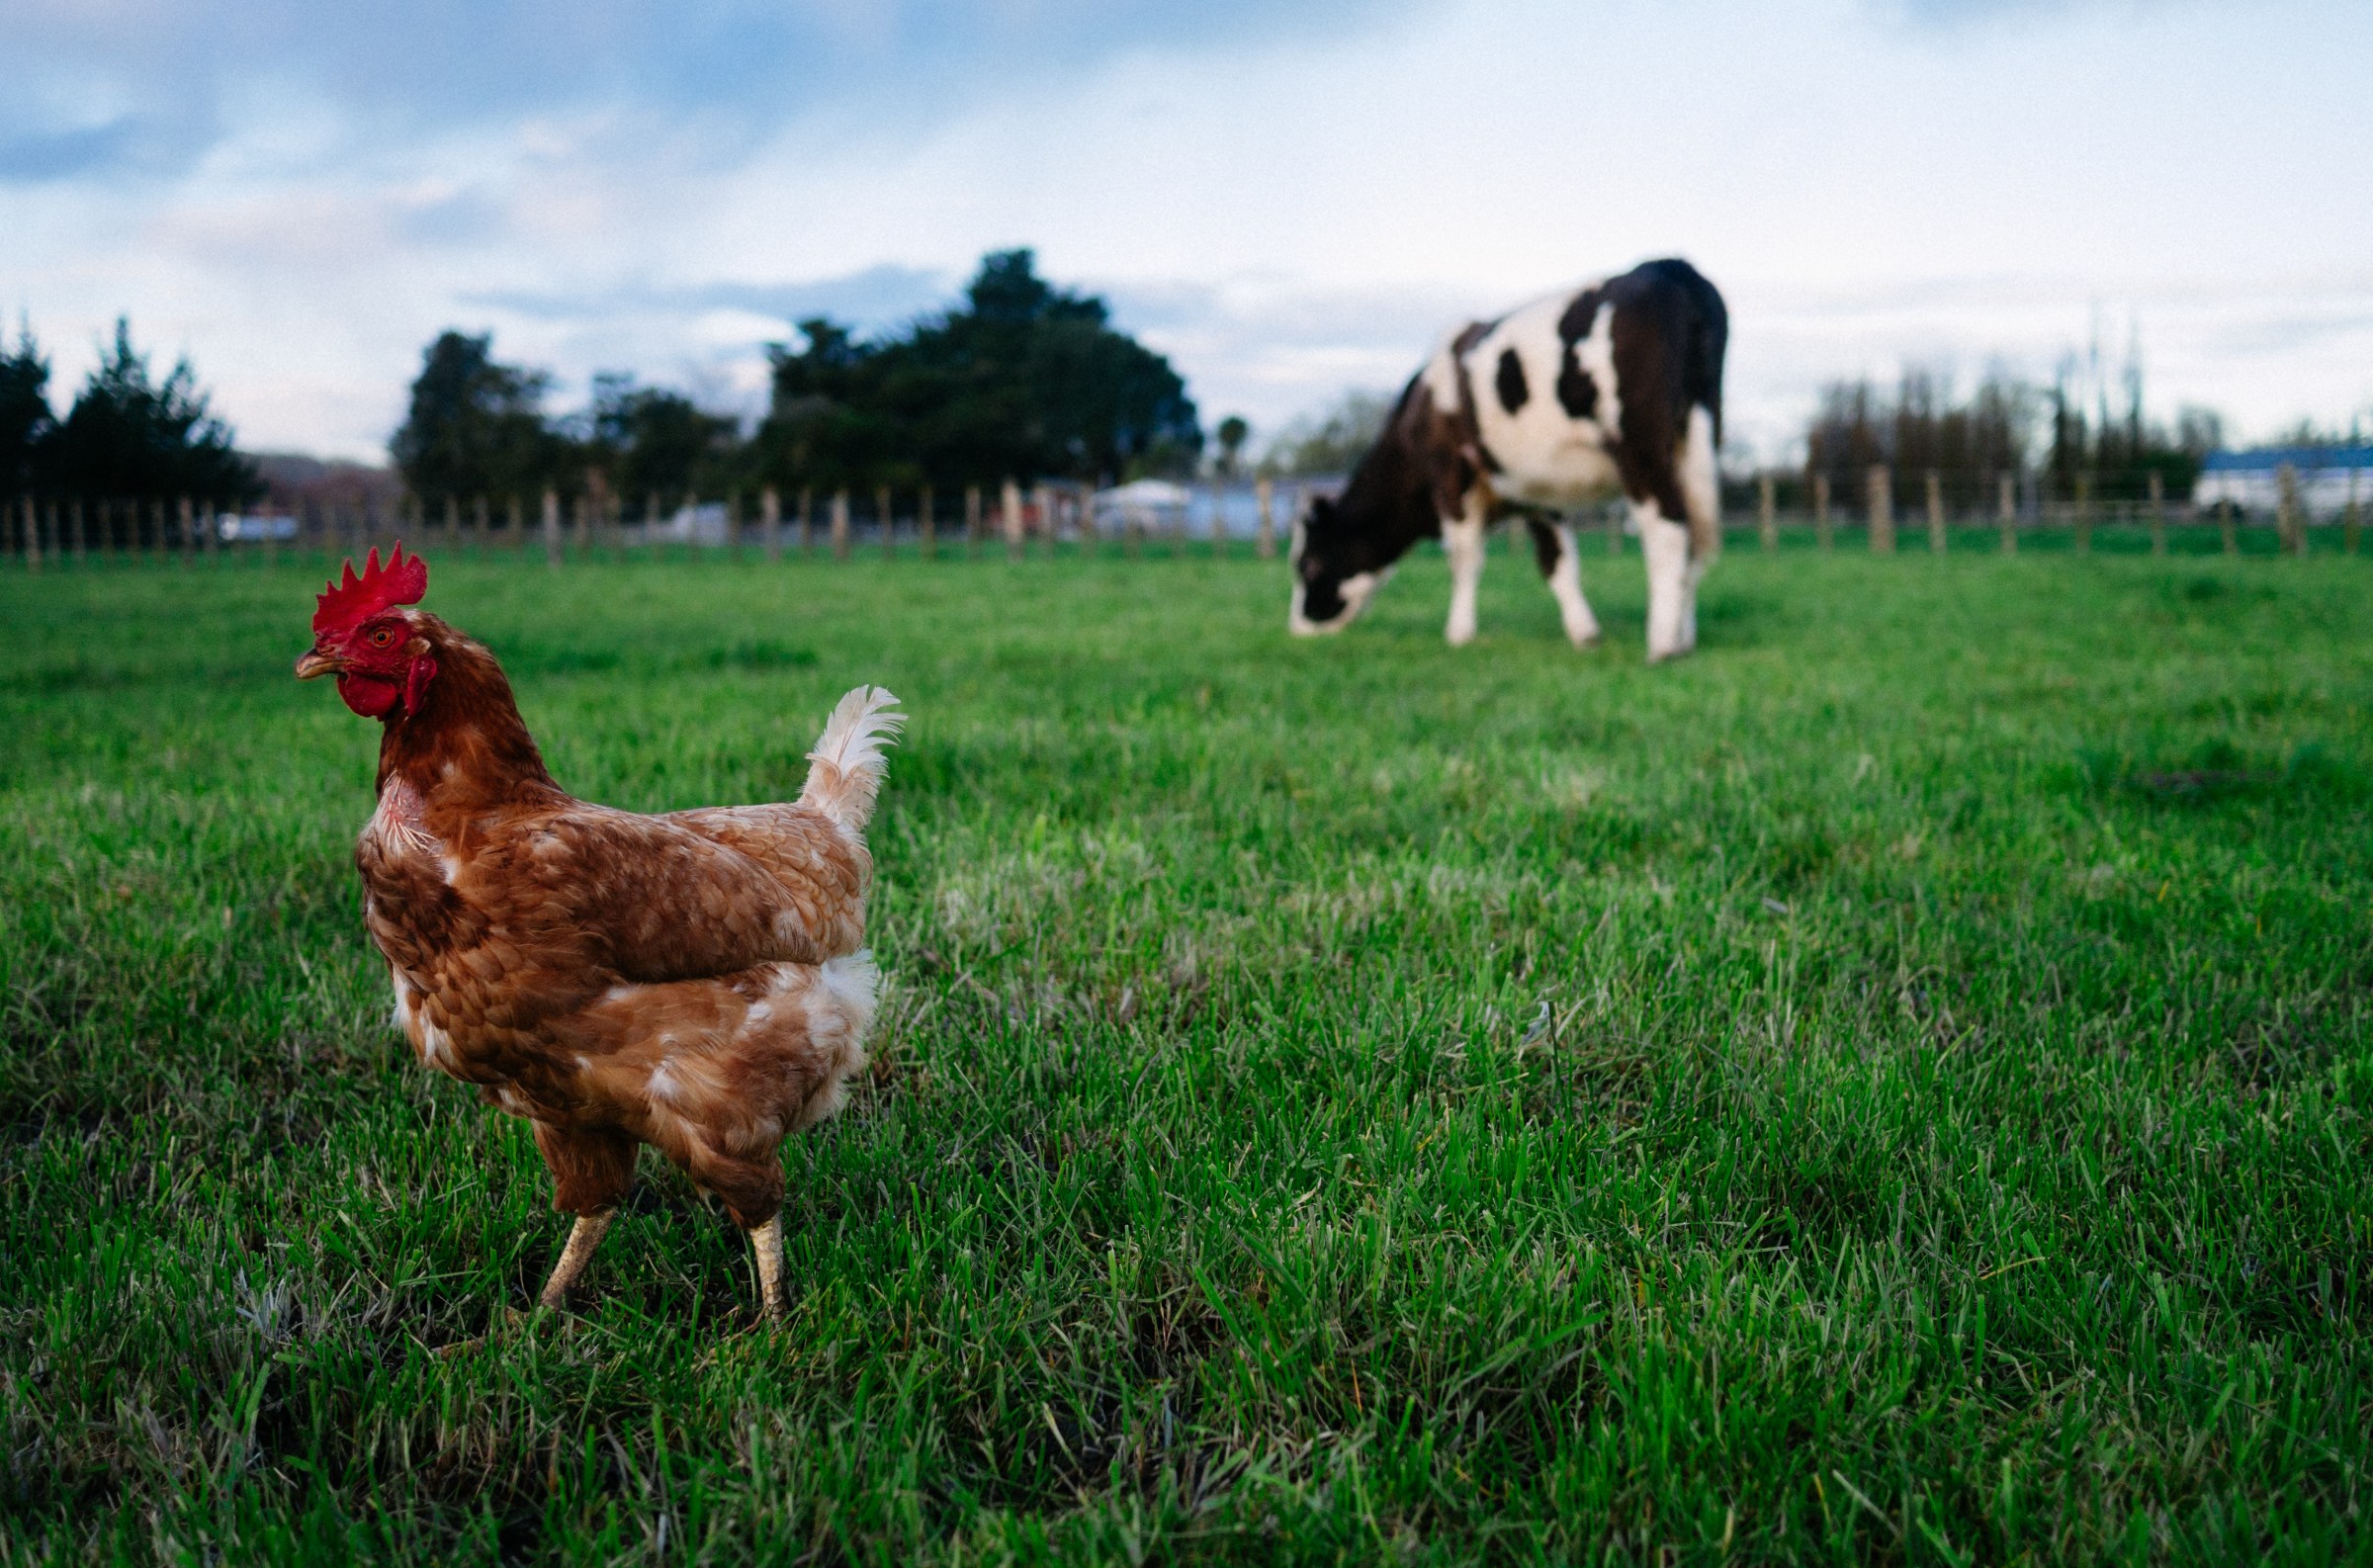 Bird flu in cows — and now in milk. How worried should we be?